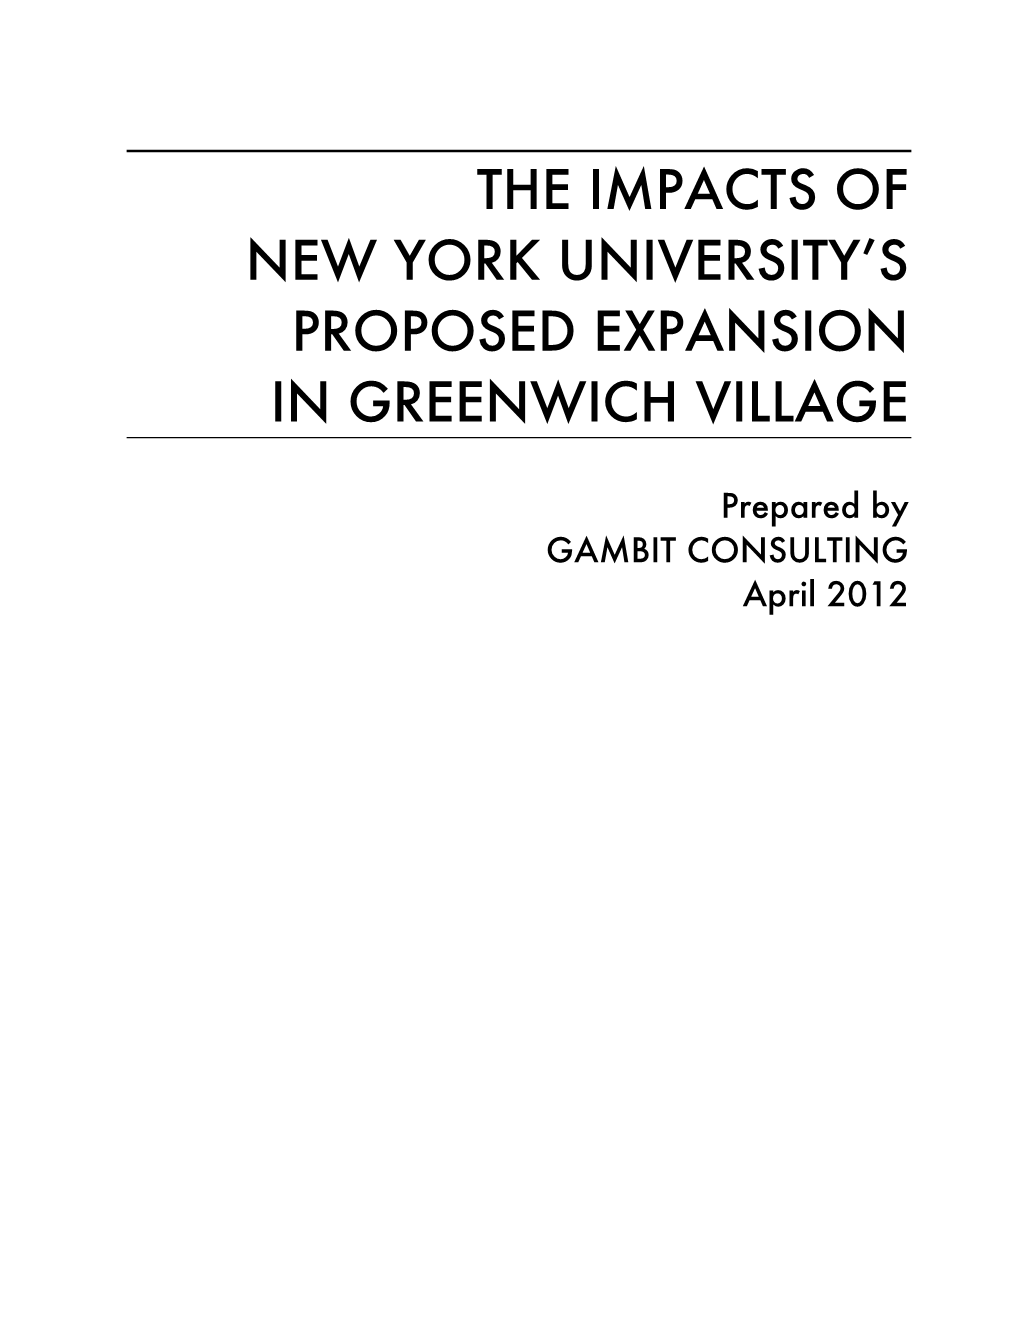 Gambit Revised Final Draft 4.4.12